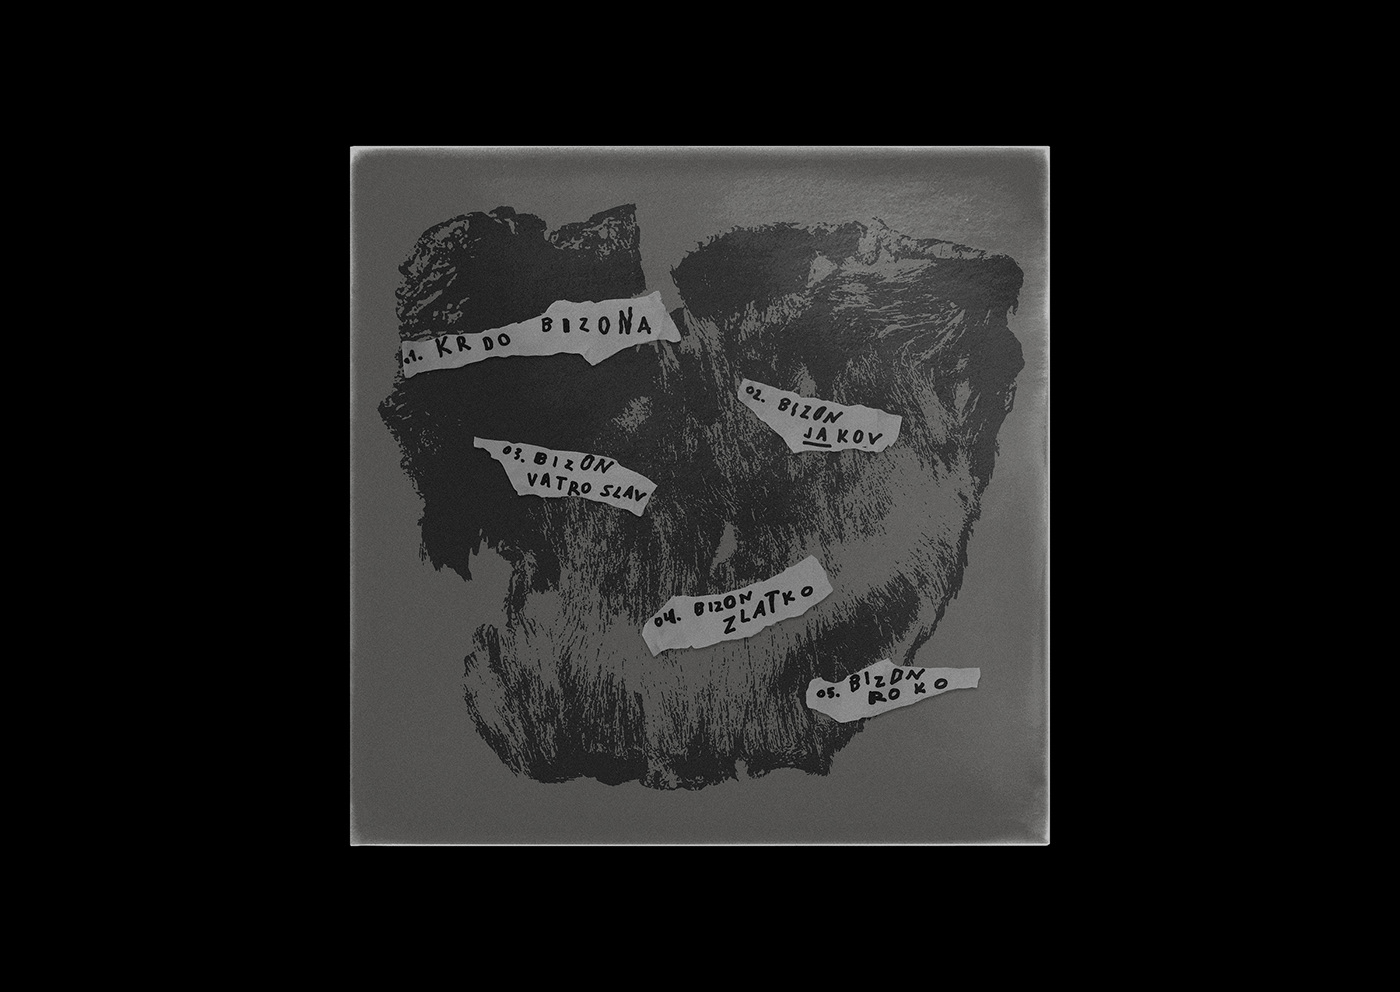 Adobe Portfolio bizon band rock Album cover vinyl animal black invert line dot texture Croatia Love